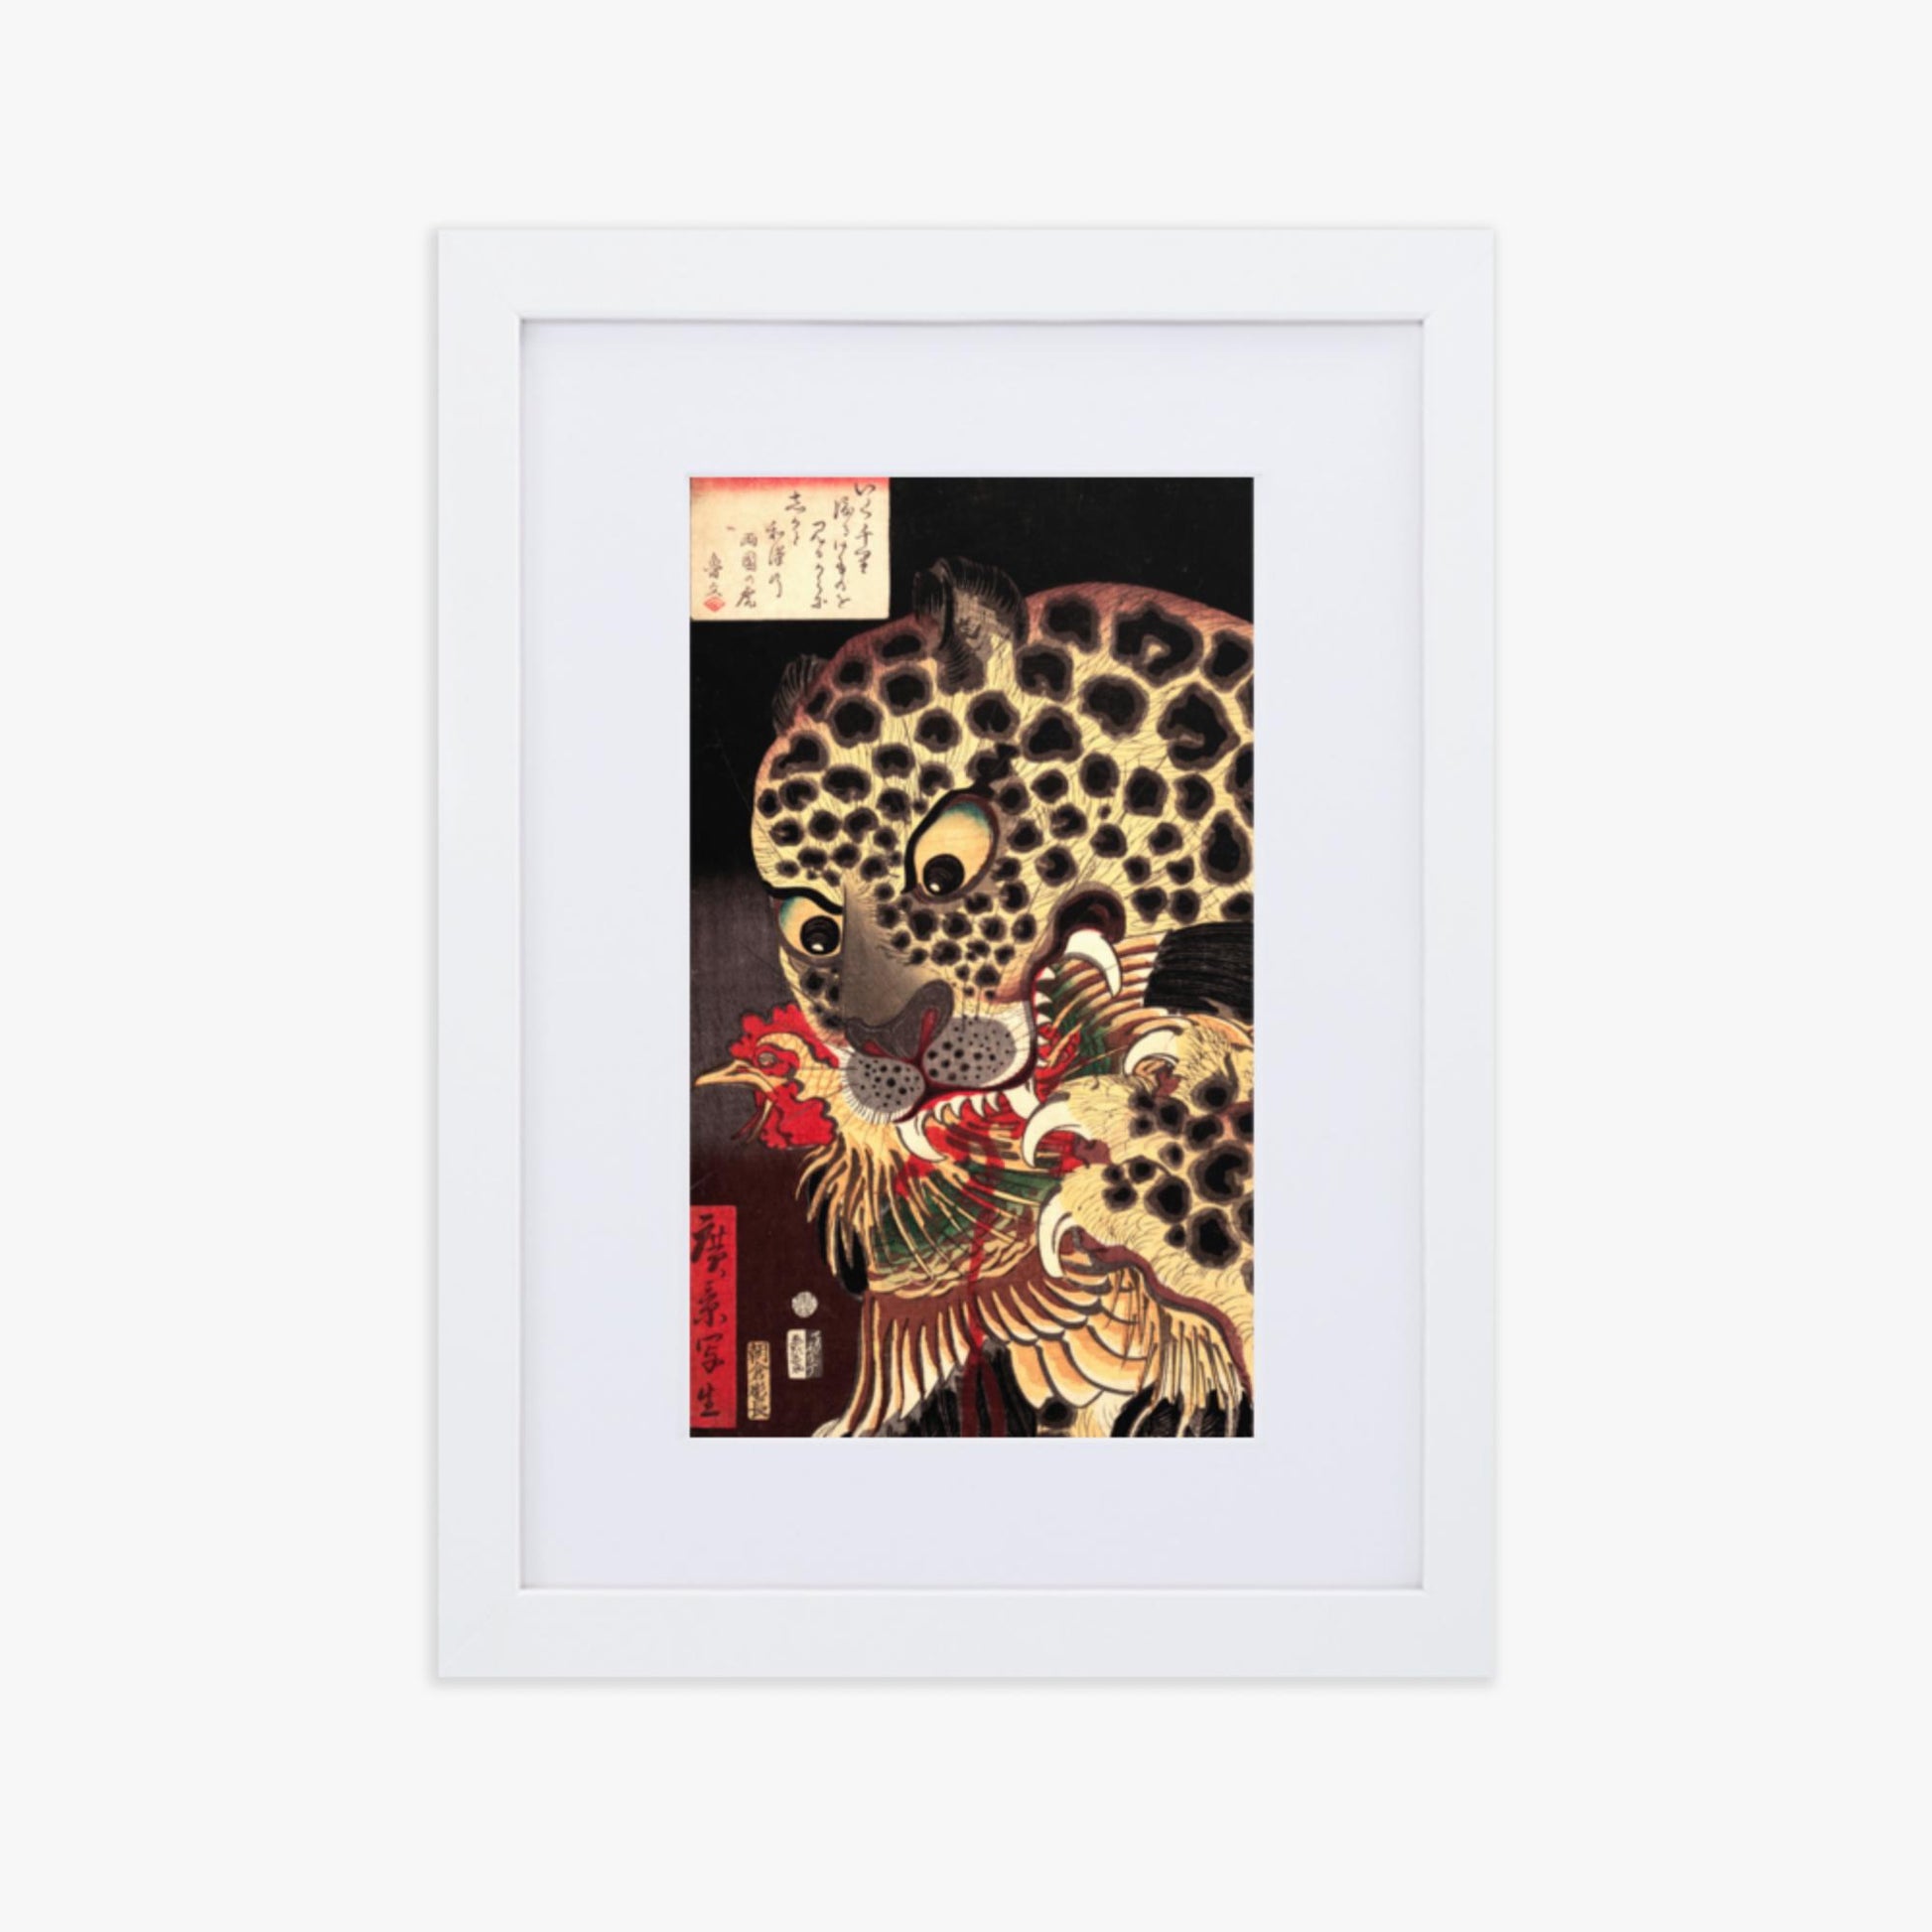 Utagawa Hirokage - The Tiger of Ryōkoku 21x30 cm Poster With White Frame